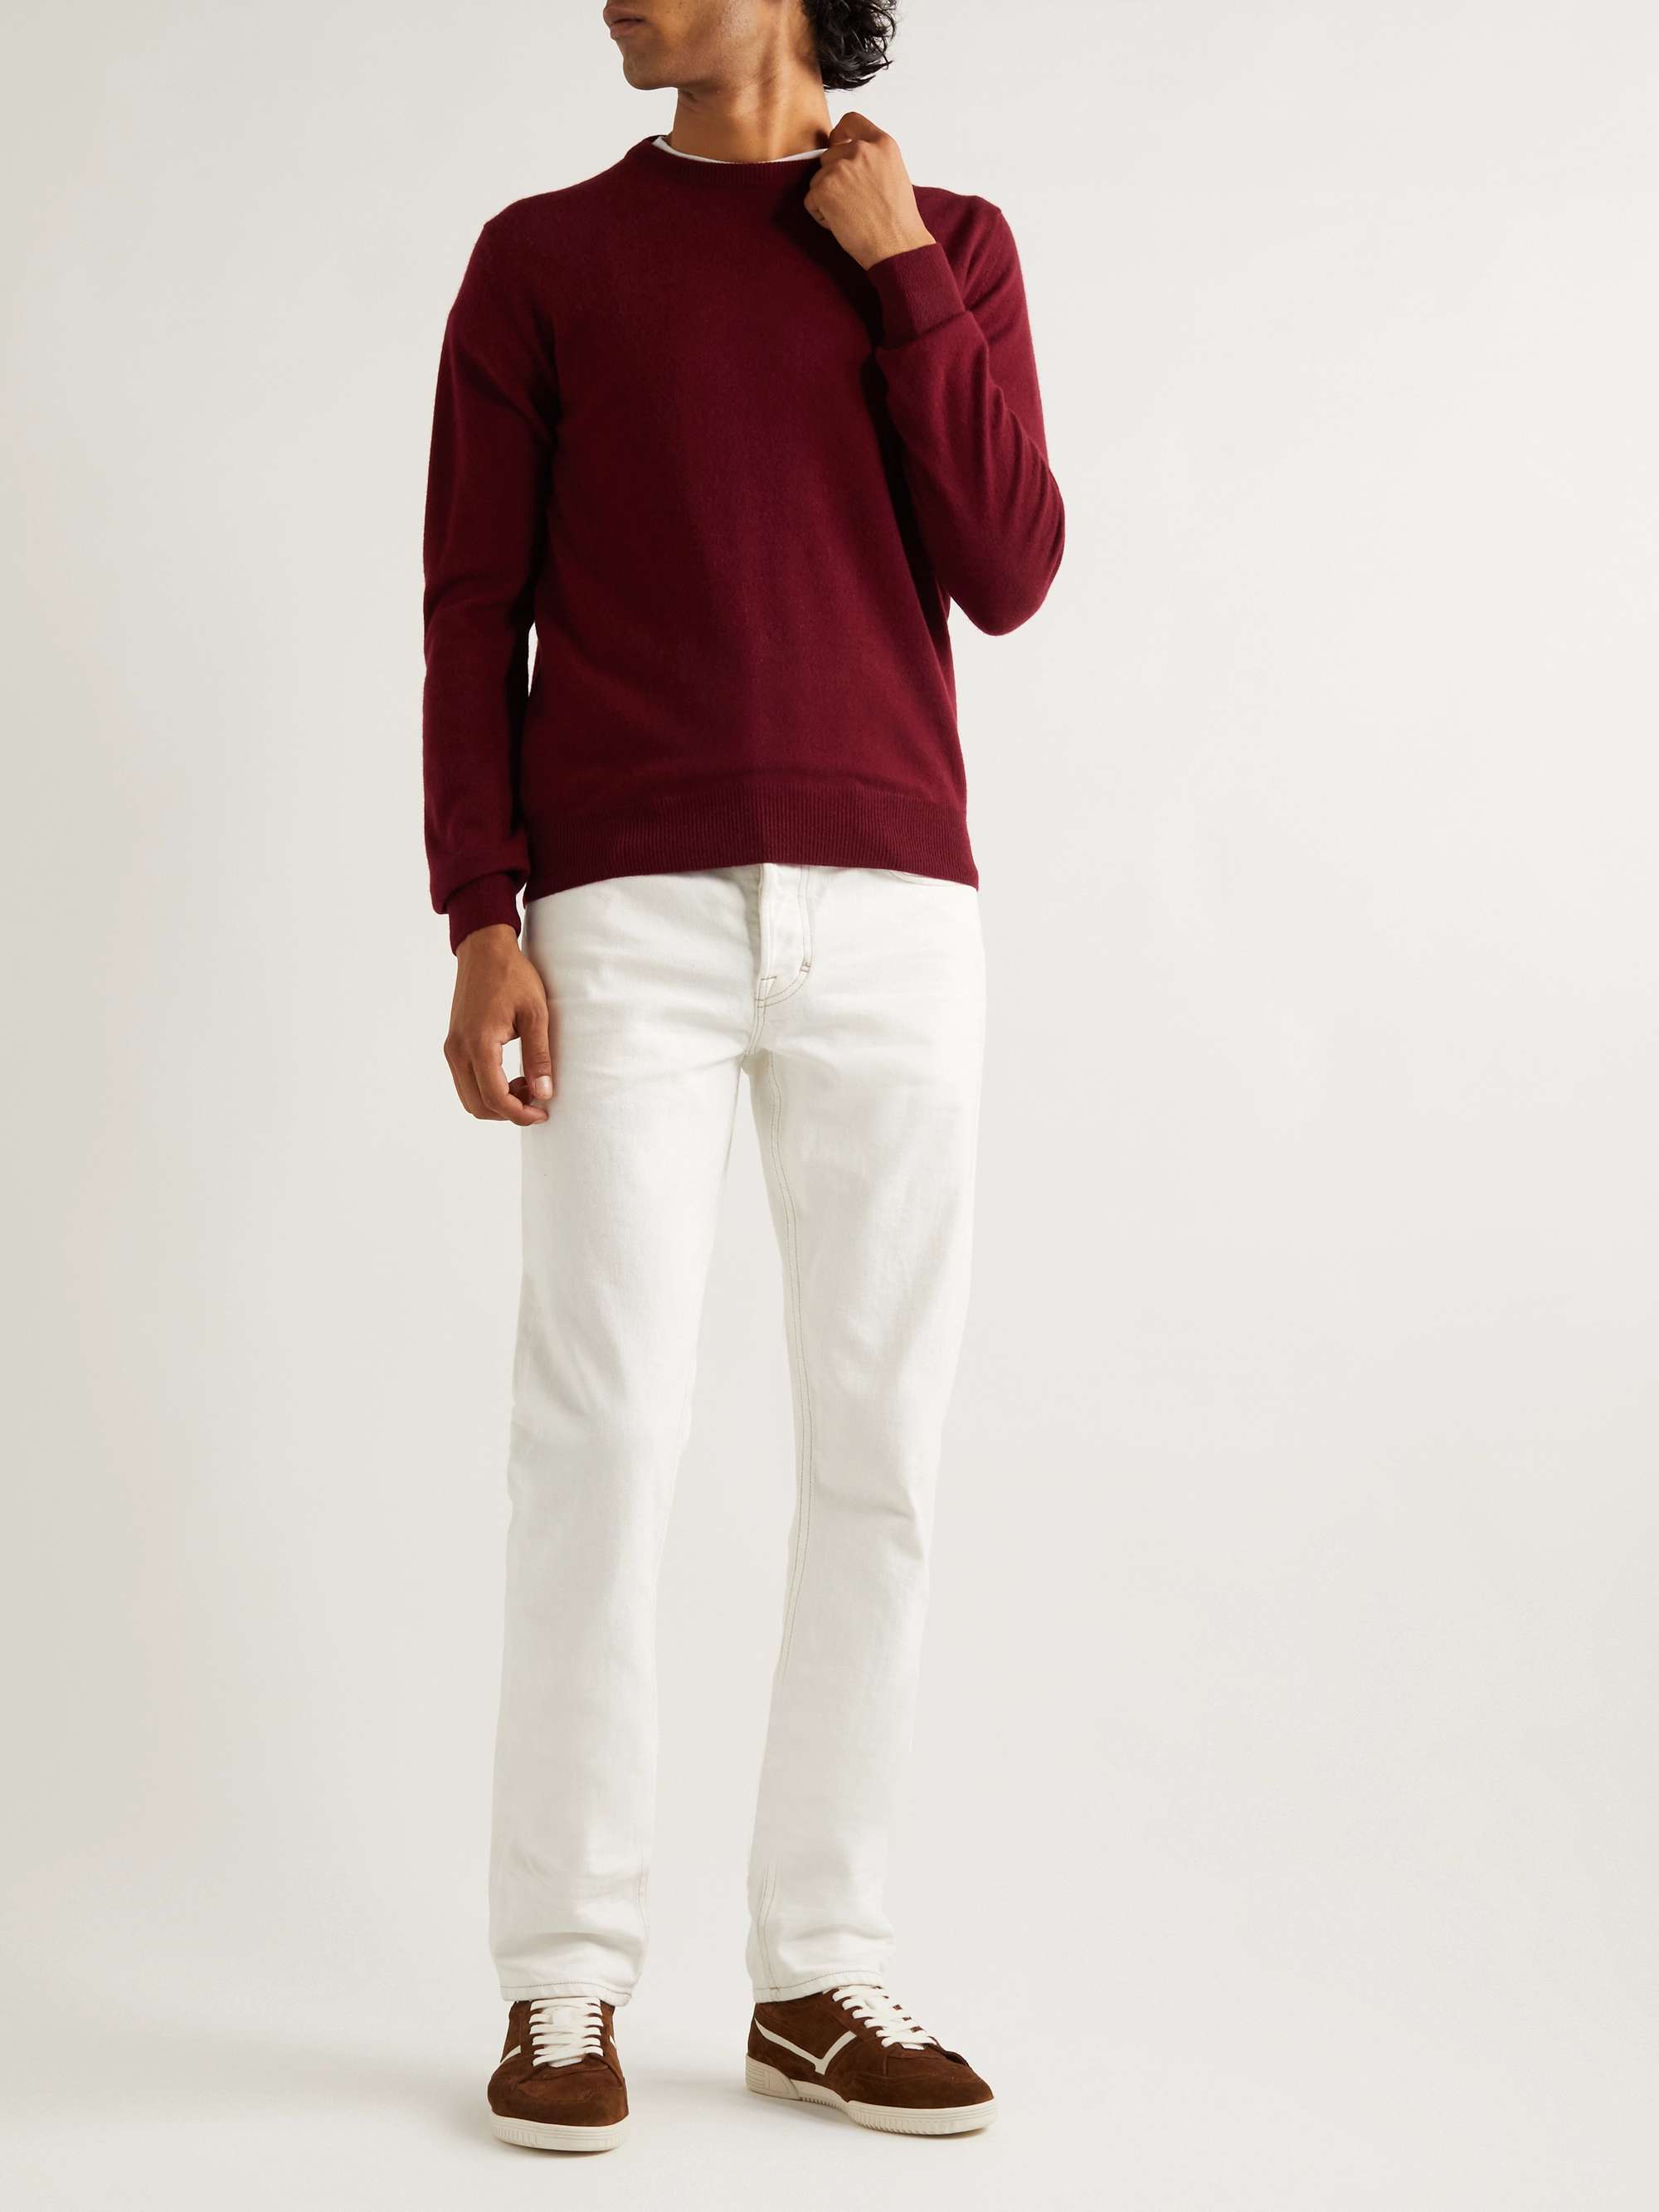 SULKA Cashmere Sweater for Men | MR PORTER